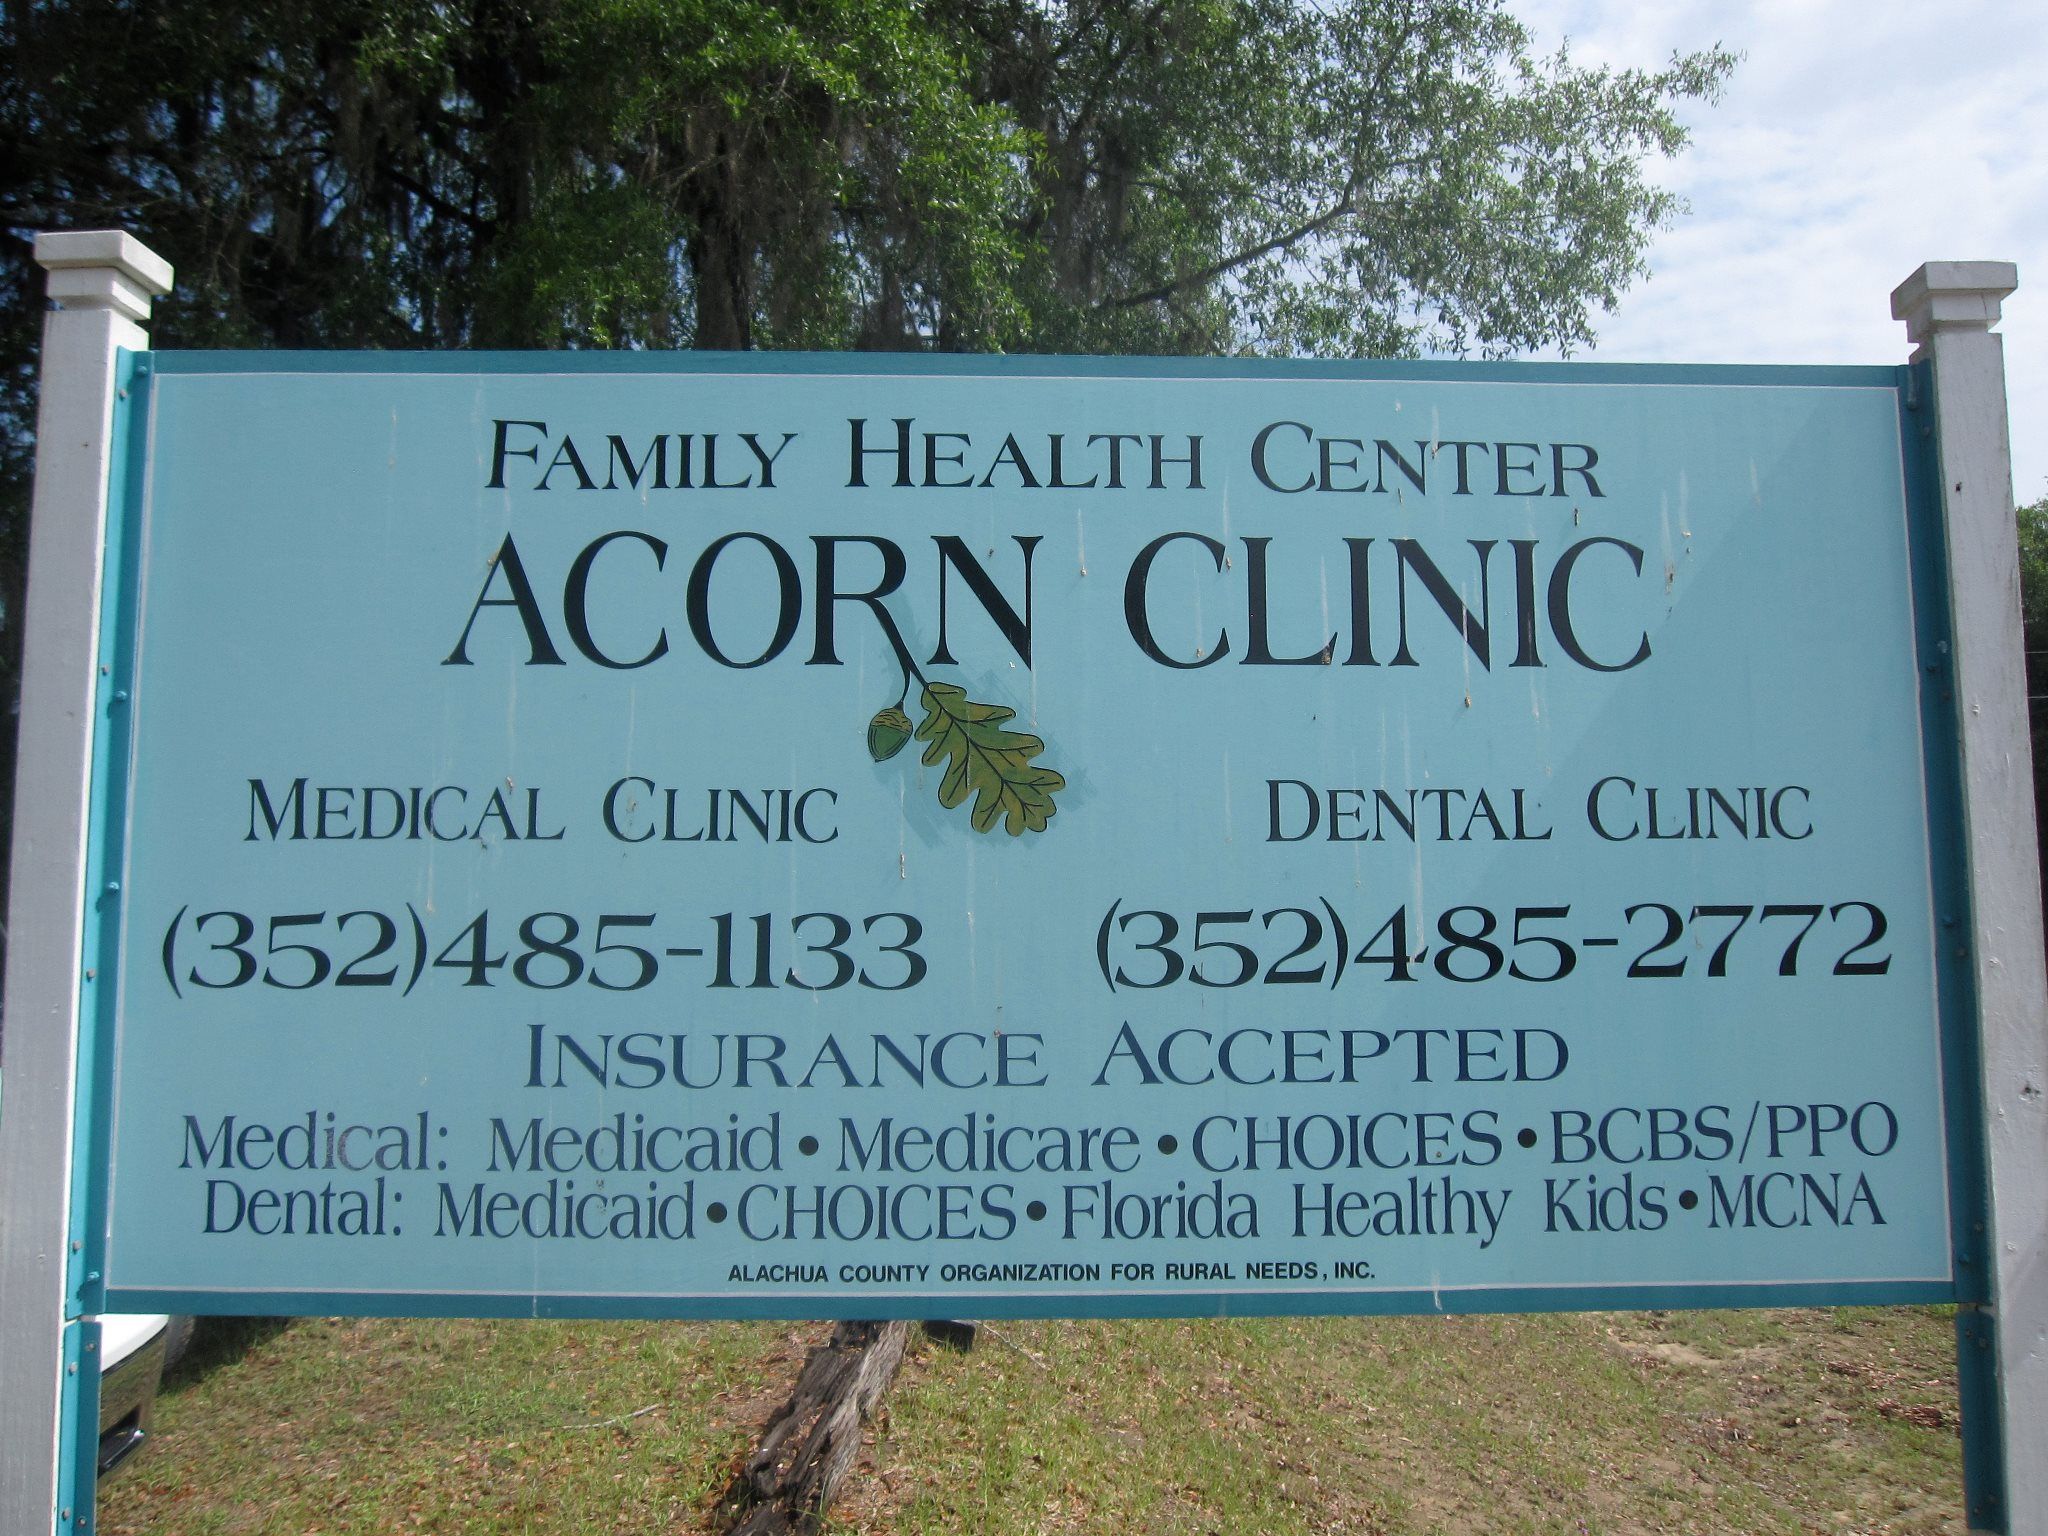 Acorn Clinic